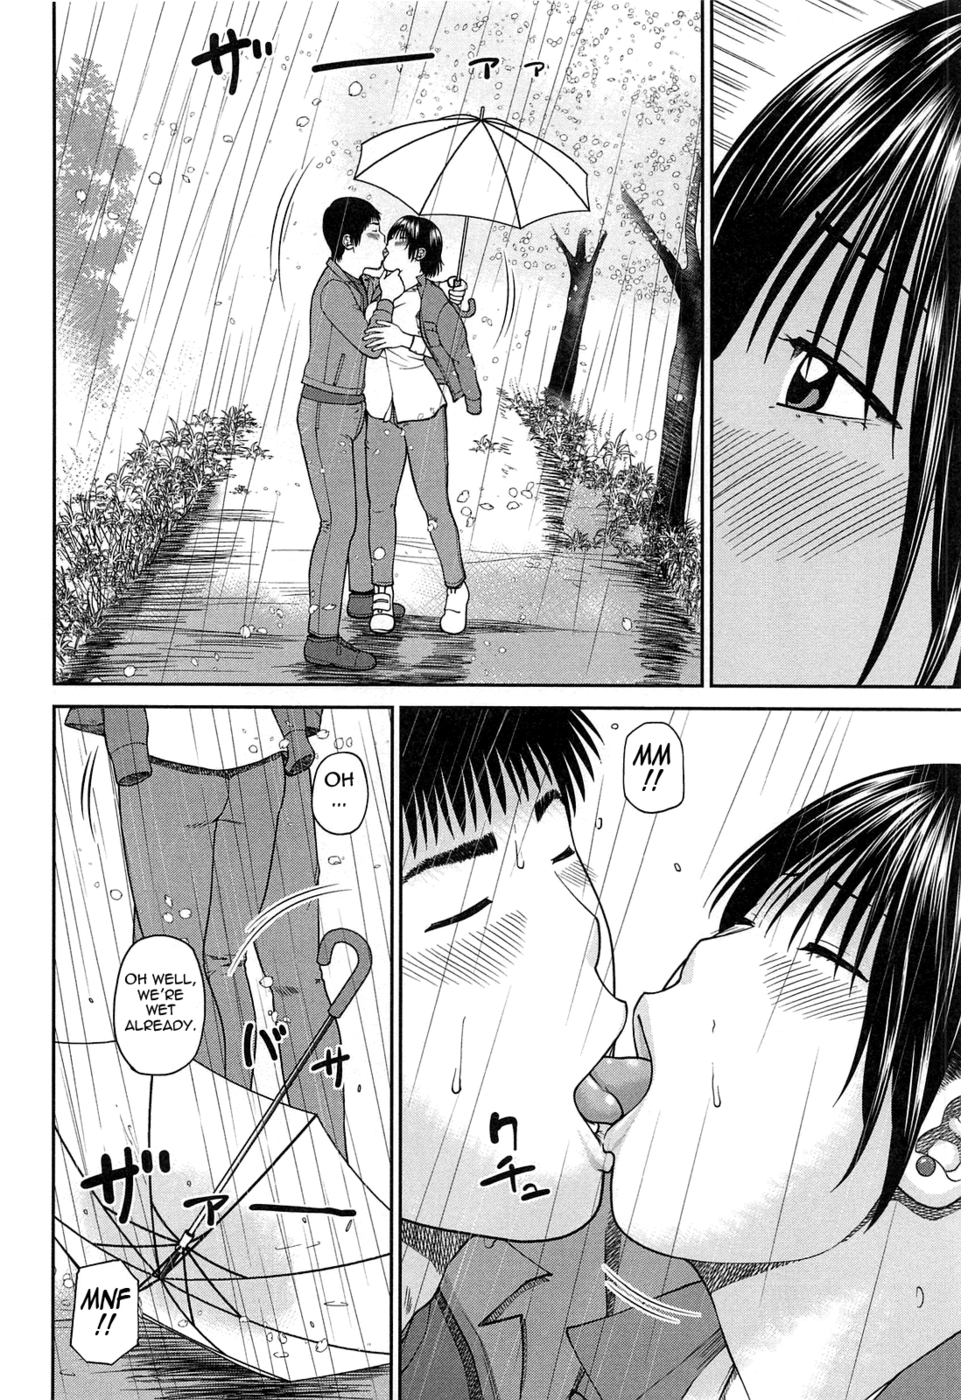 Hentai Manga Comic-35 Year Old Ripe Wife-Chapter 2-Wet Wife (Second Half)-8